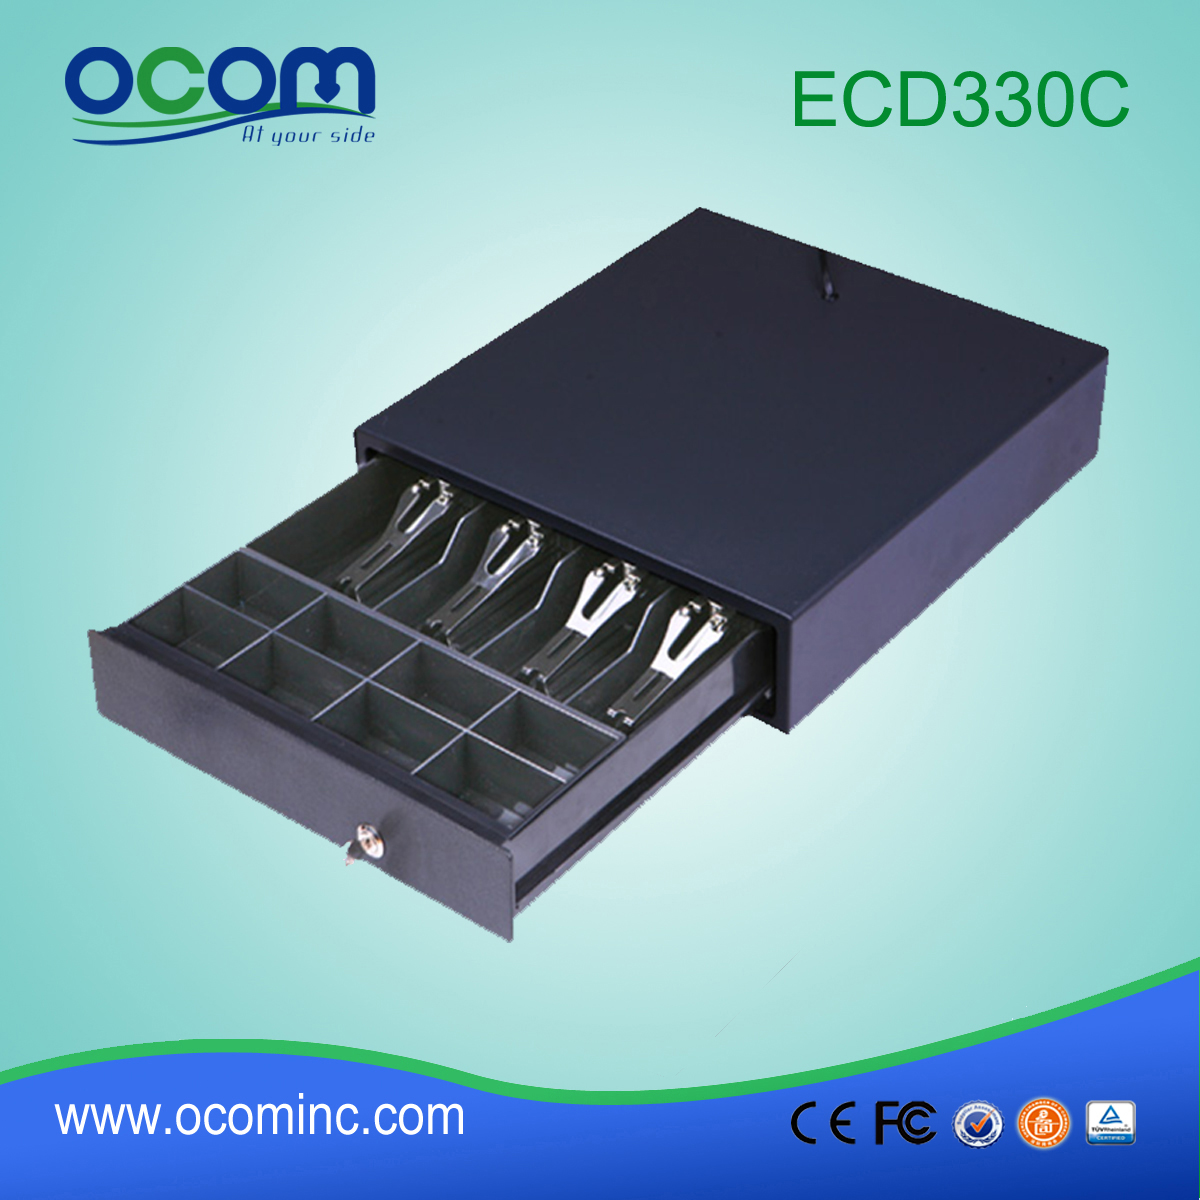 (ECD330C) Νέο συρτάρι μετρητών pos μαύρου χρώματος